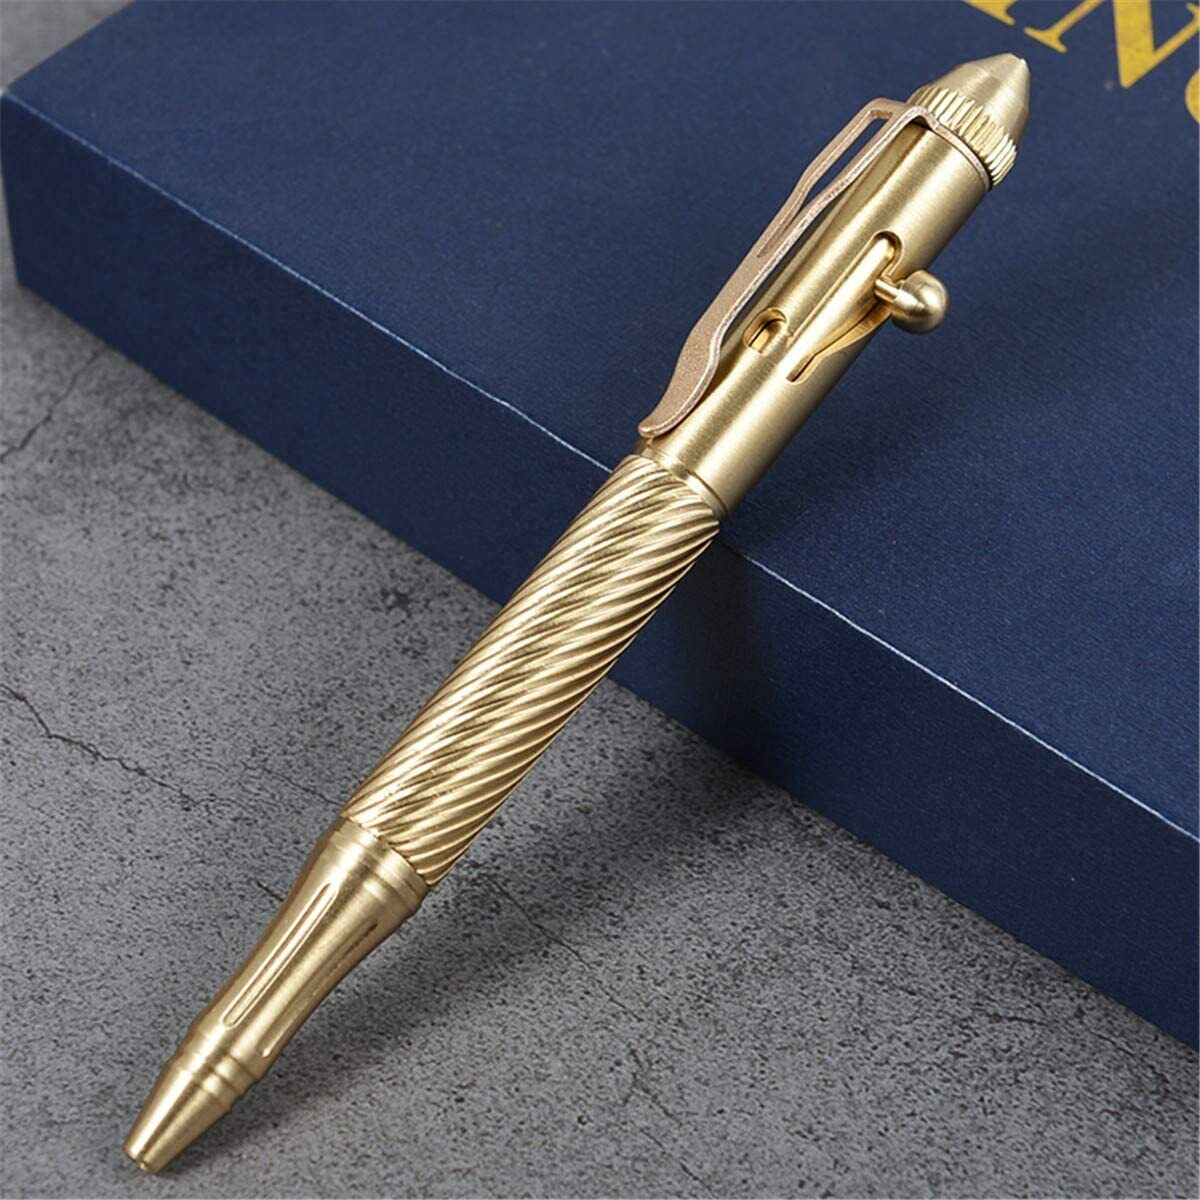 Solid Brass Bolt Action Pen Pocket Tool Signature Pen Ballpoint Pen Outdoor EDC